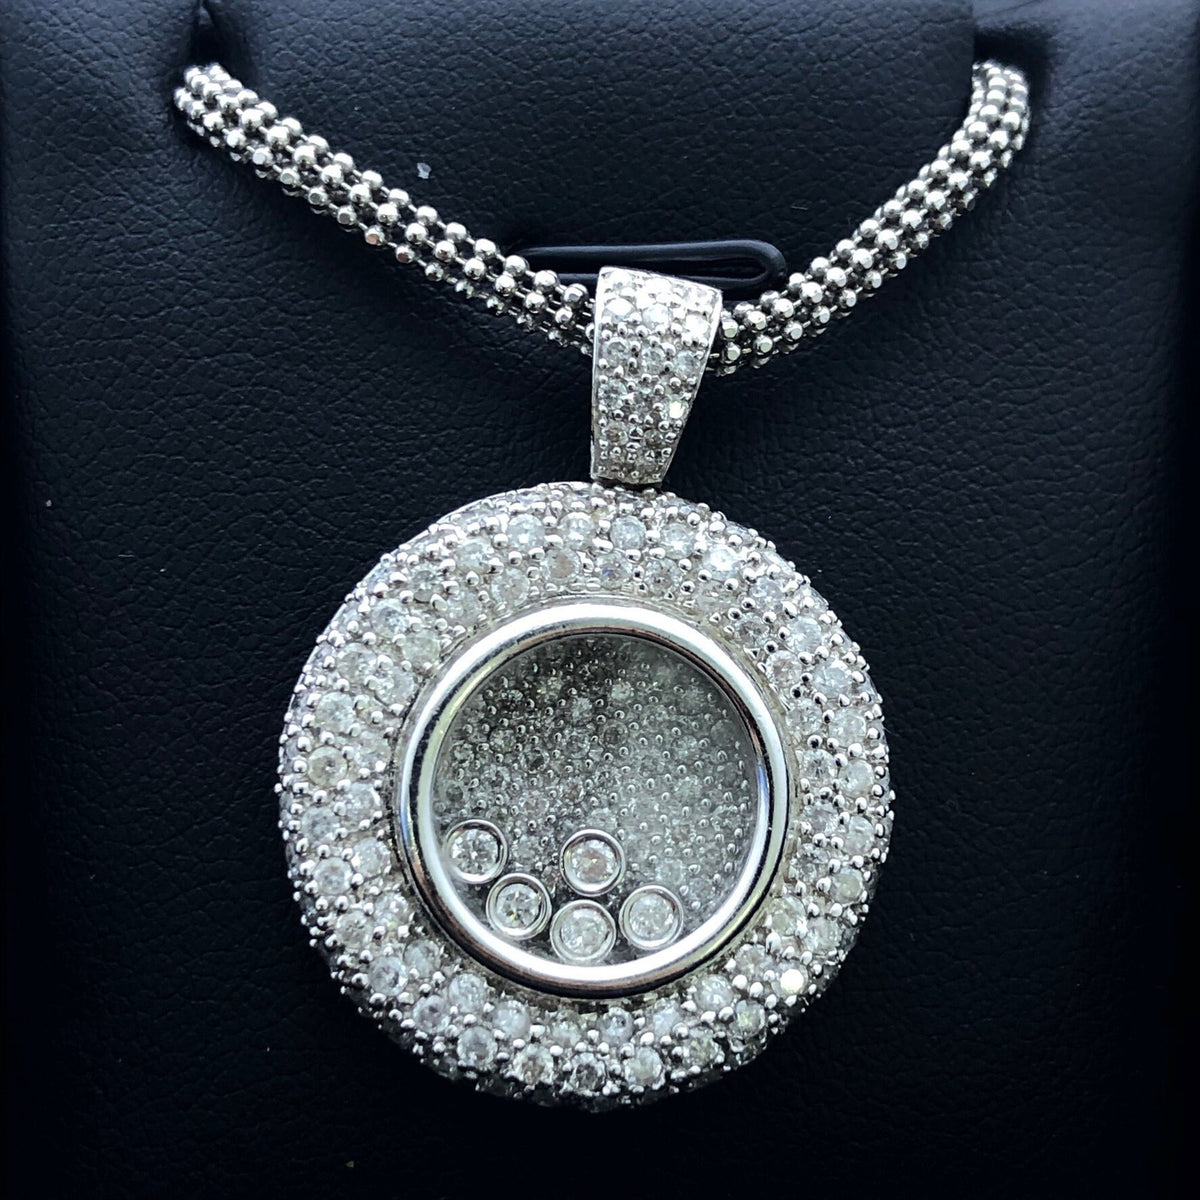 LIV 14k White Gold & Diamonds G/VS1 Floating Design Round Halo Pendant Necklace Gift